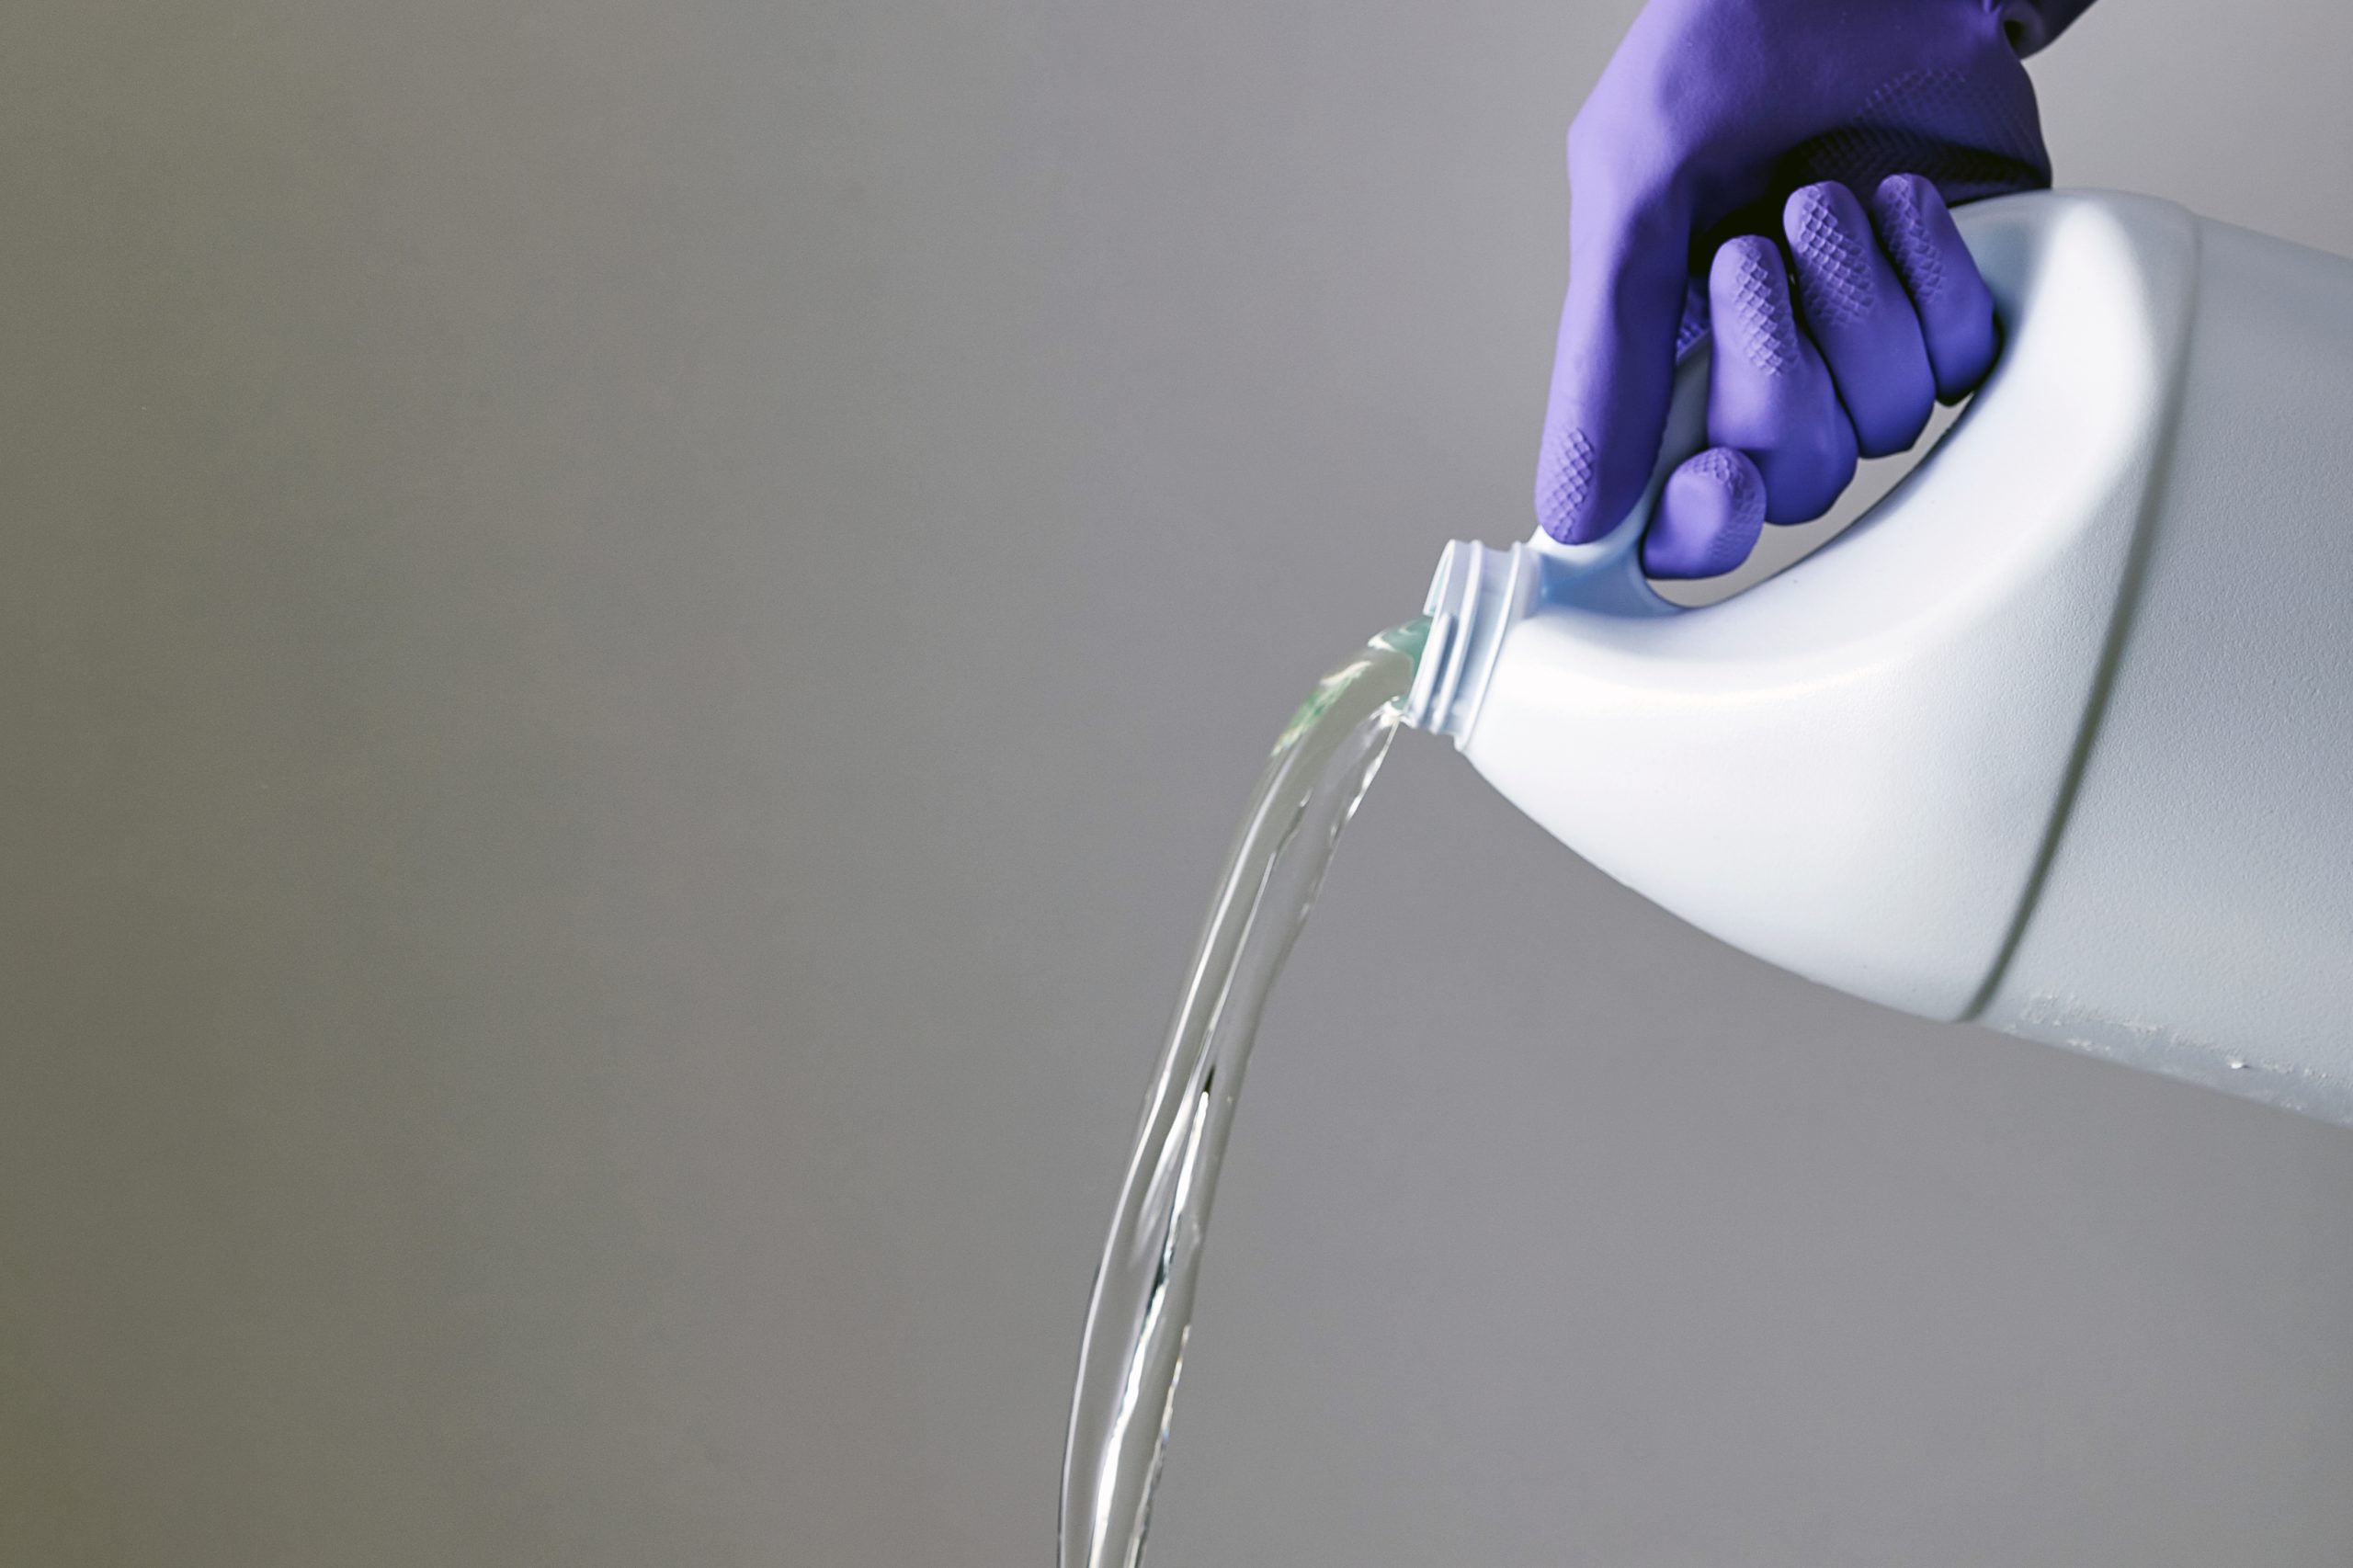 chlorine concentration for sanitizing